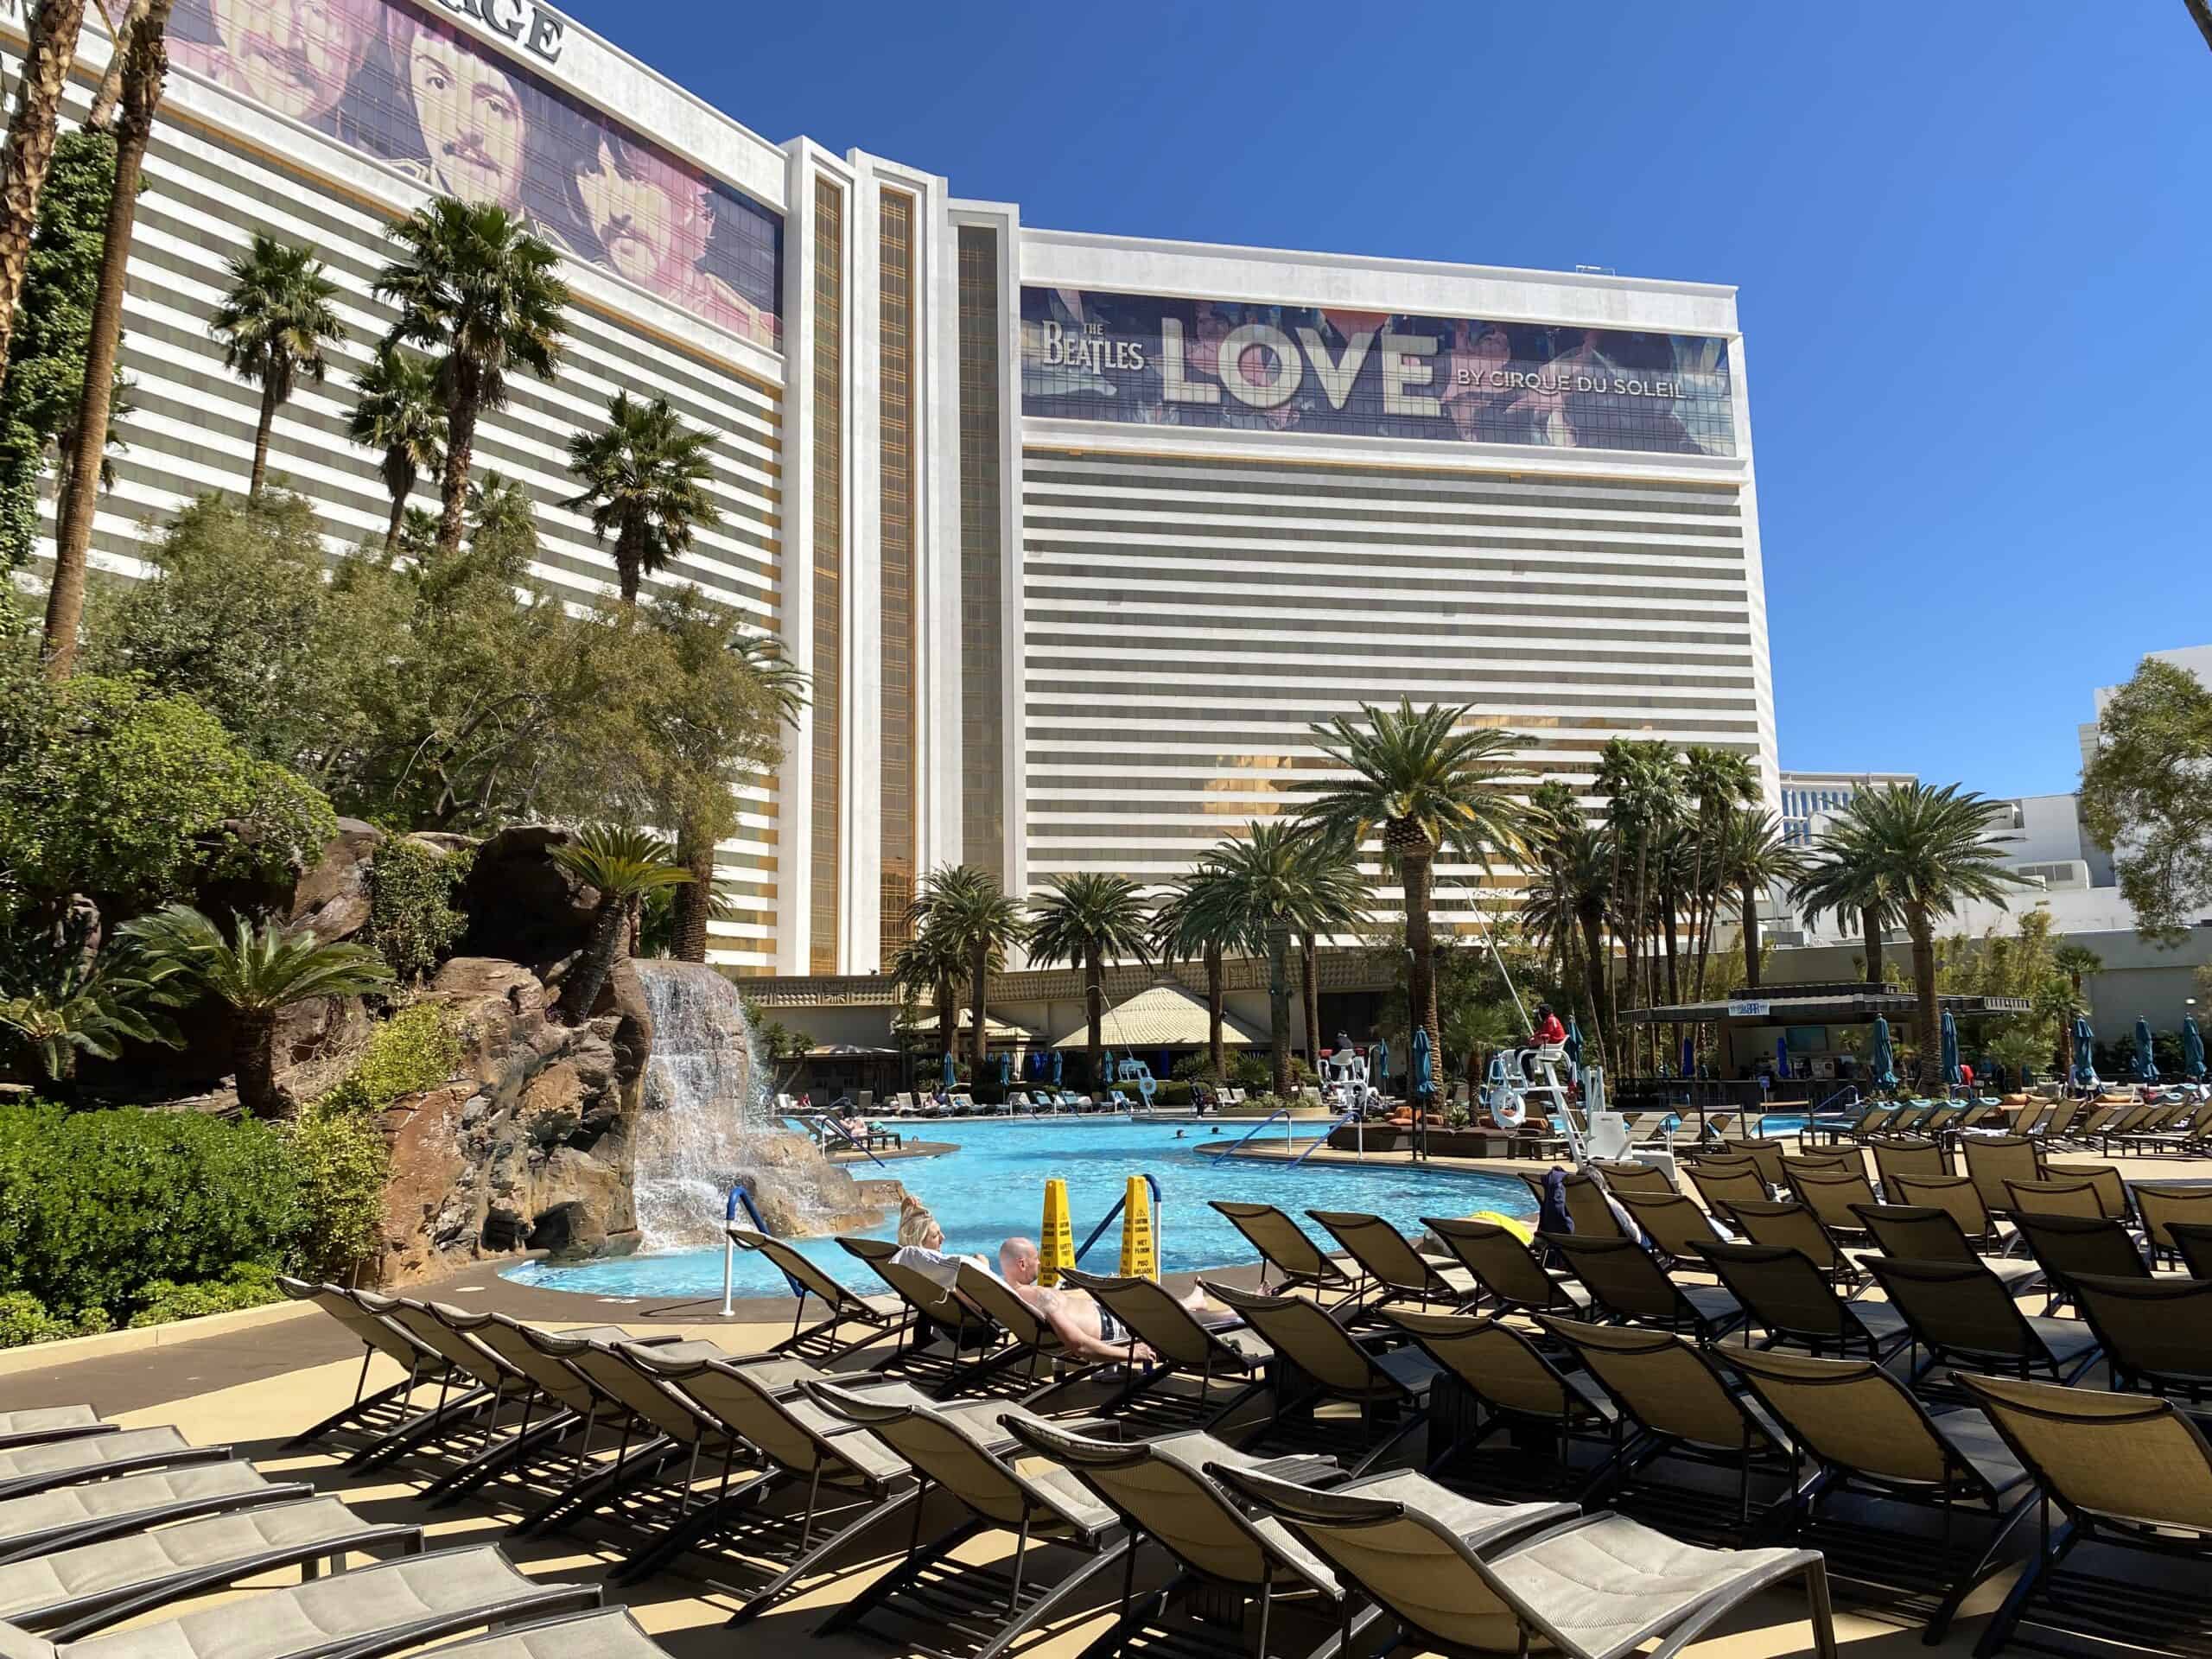 Pools in Las Vegas - The Mirage Pool - The Mirage